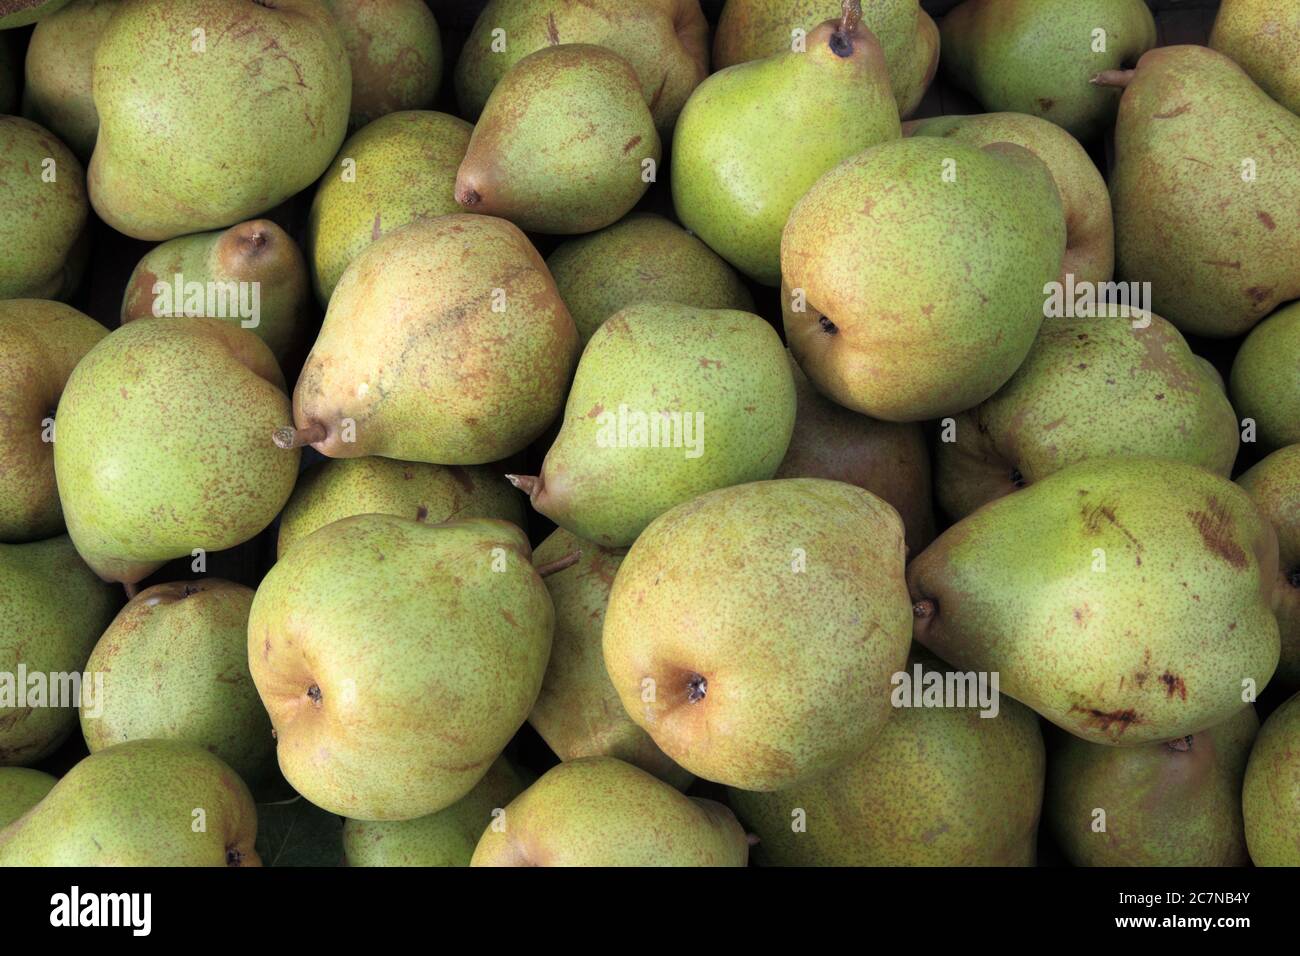 https://c8.alamy.com/comp/2C7NB4Y/pear-red-comice-pears-cookers-cooking-pears-pyrus-communis-2C7NB4Y.jpg